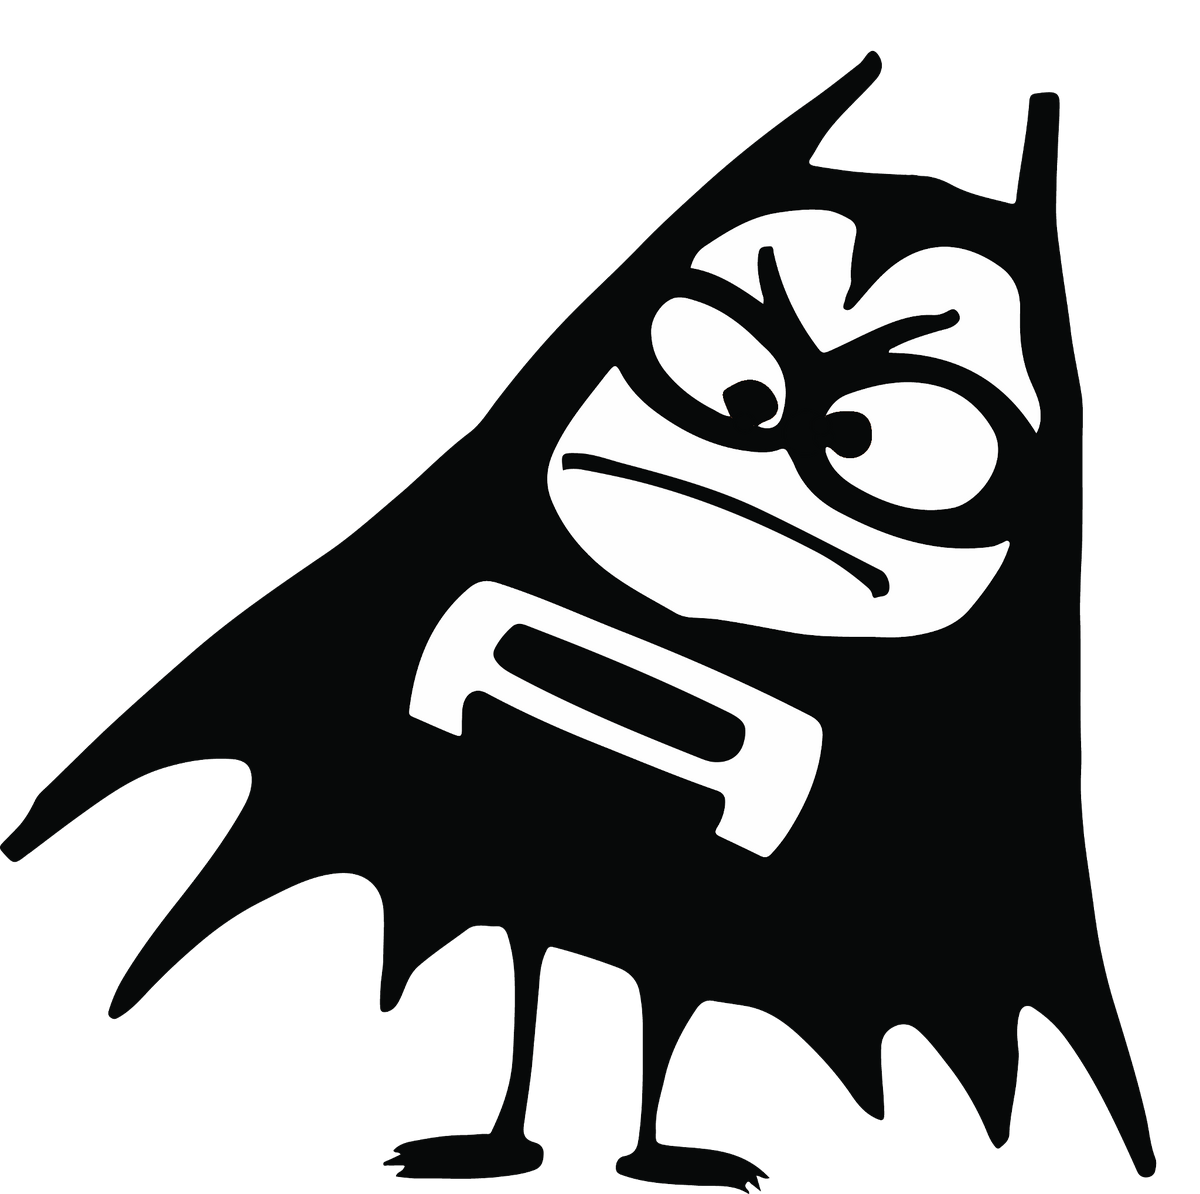 The Lil Bat, The Aquabats! Wiki